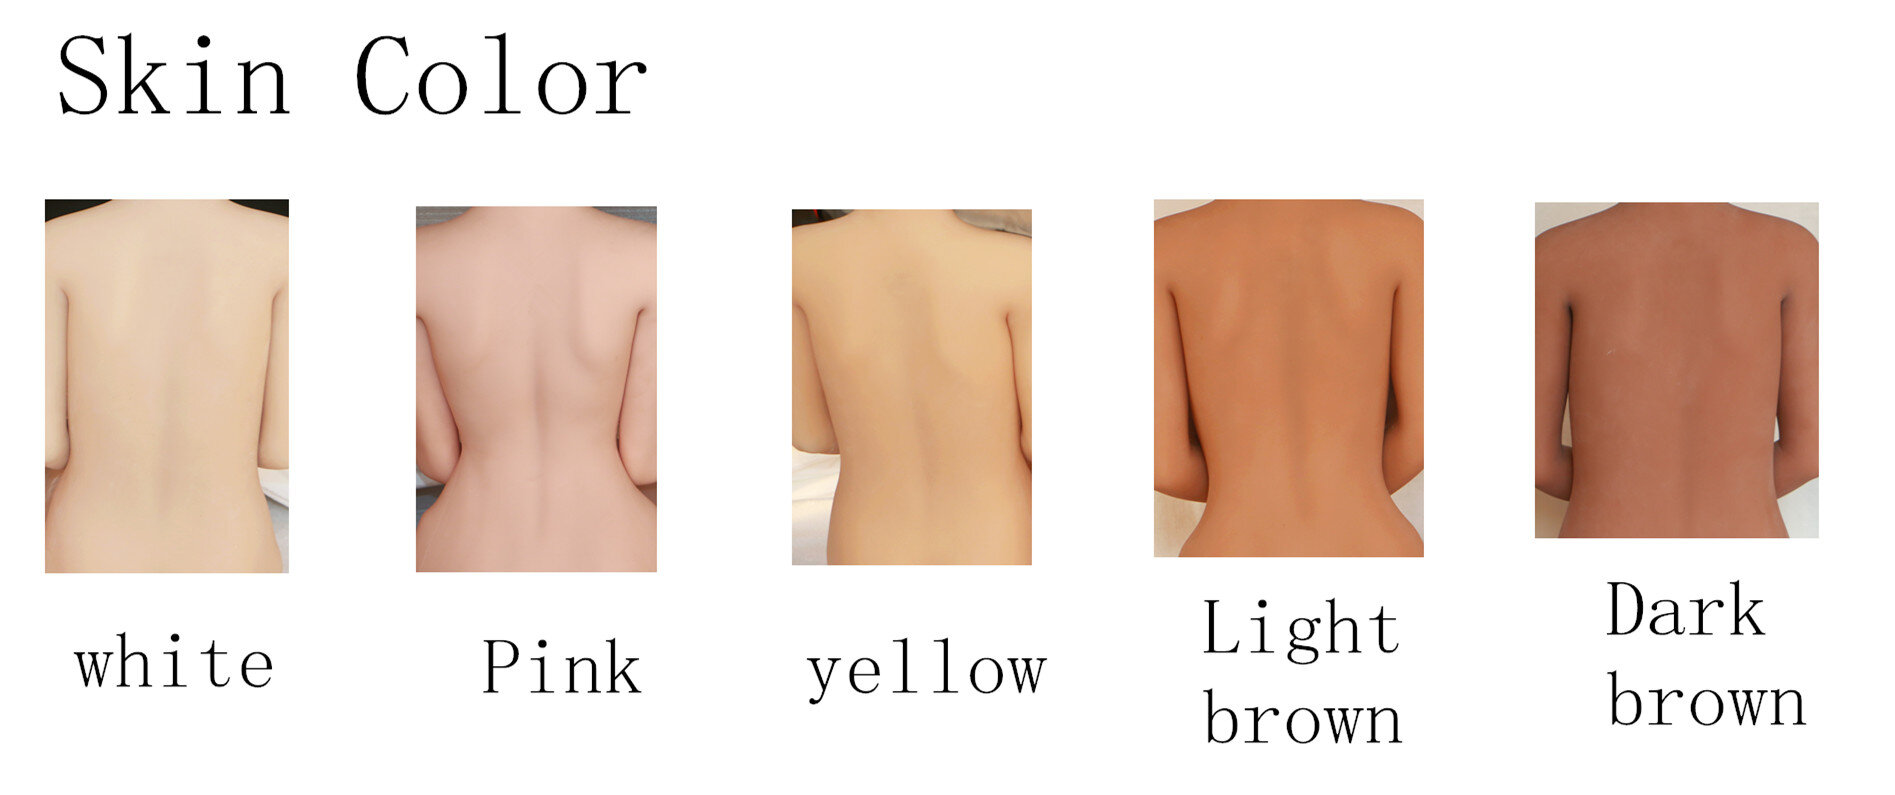 The skin color.jpg